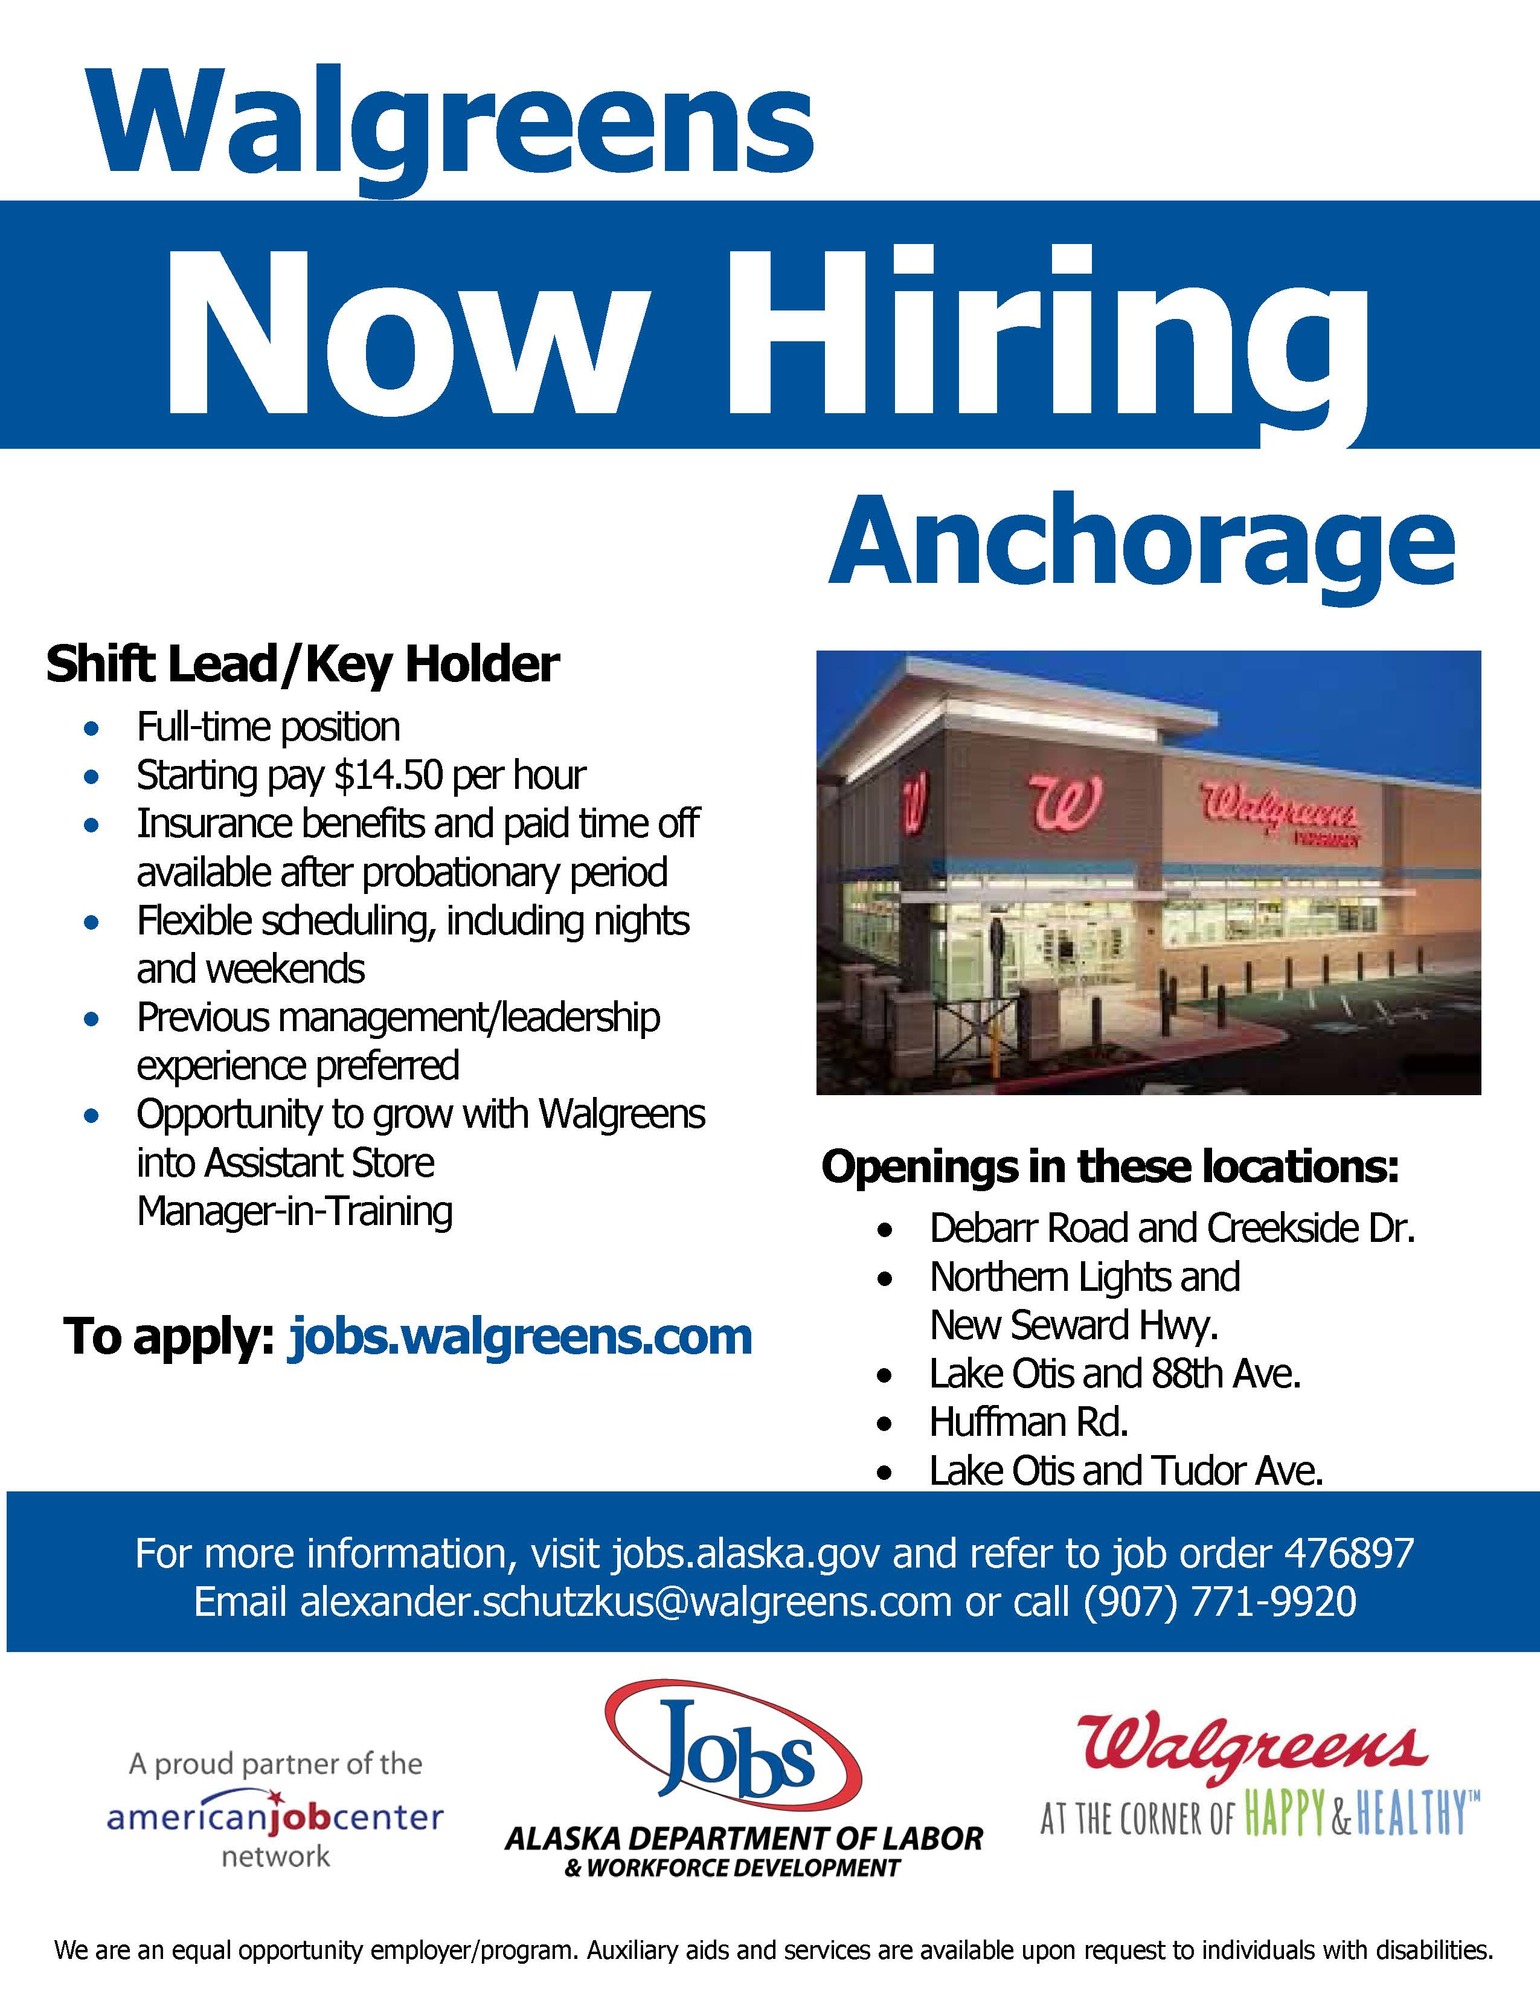 Walgreens Now Hiring Shift Leader/Keyholder at different Anchorage